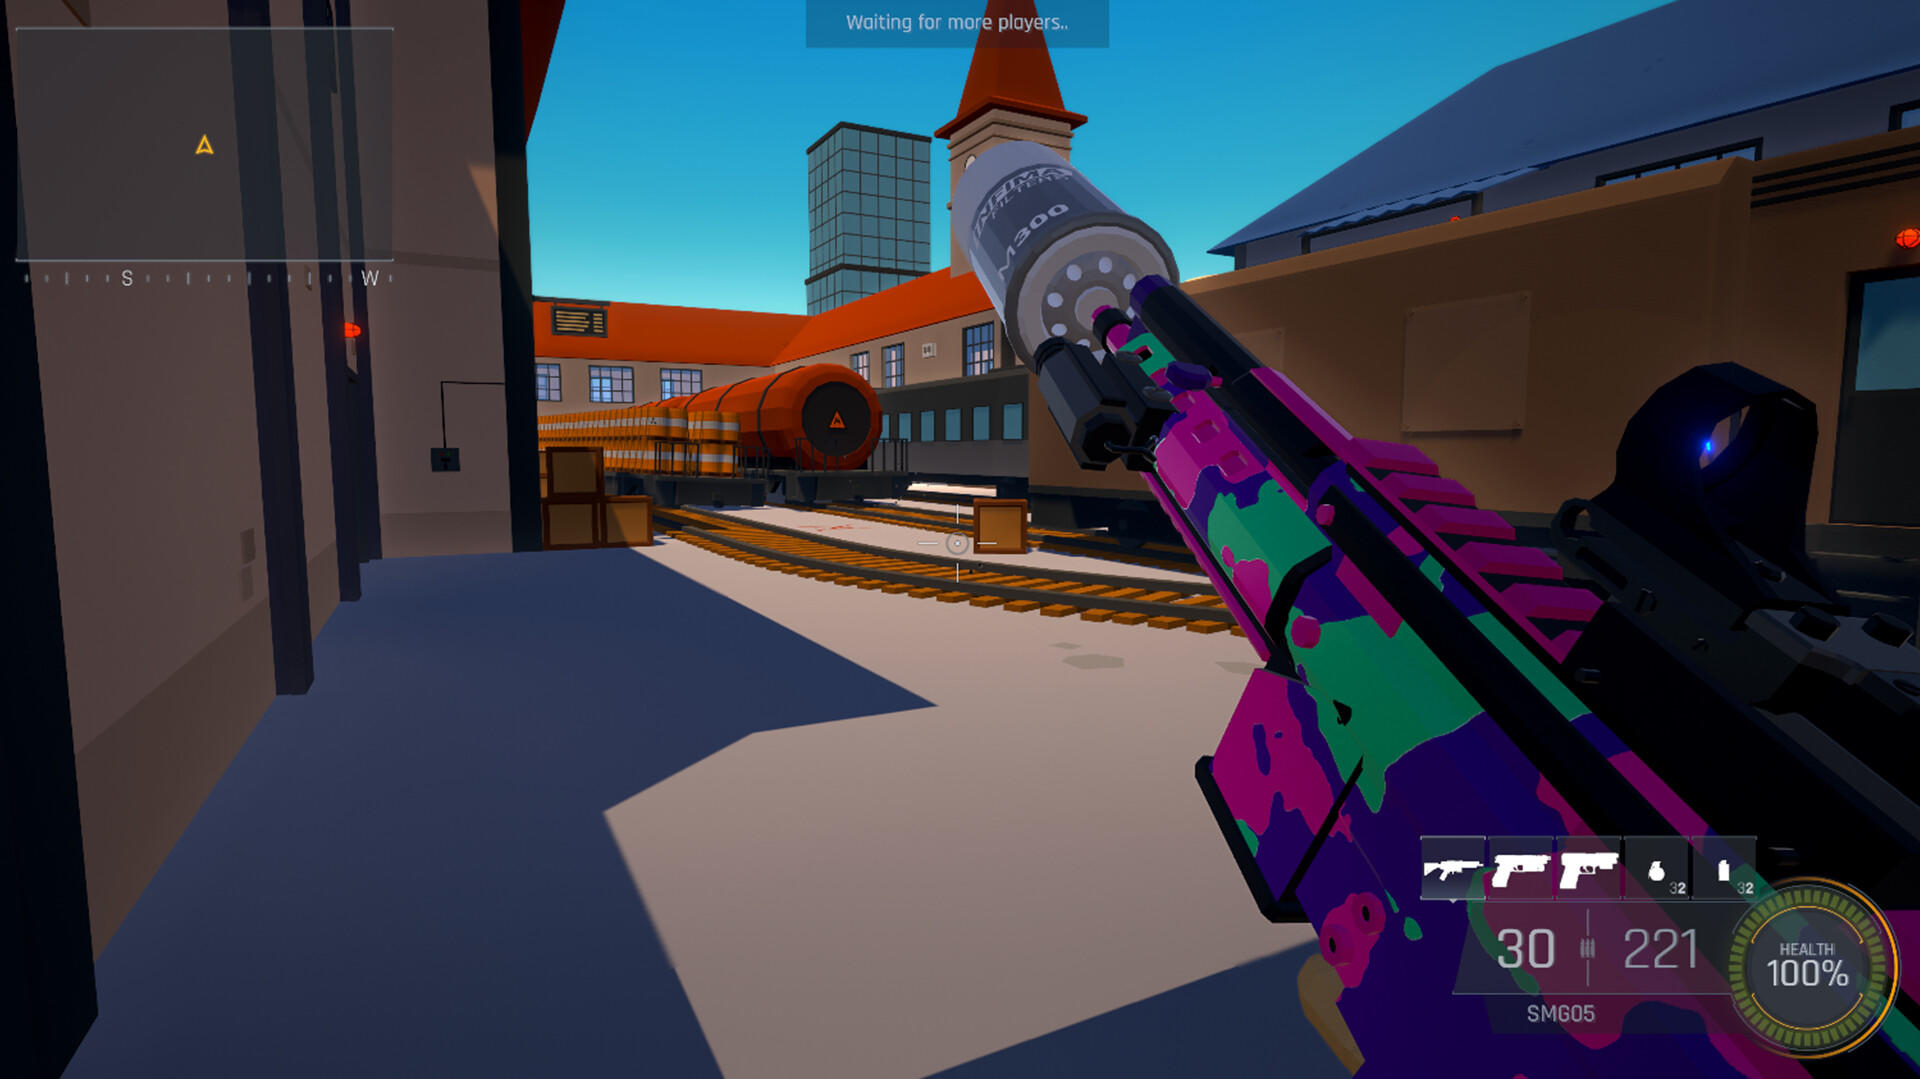 Screenshot of Eldorado FPS